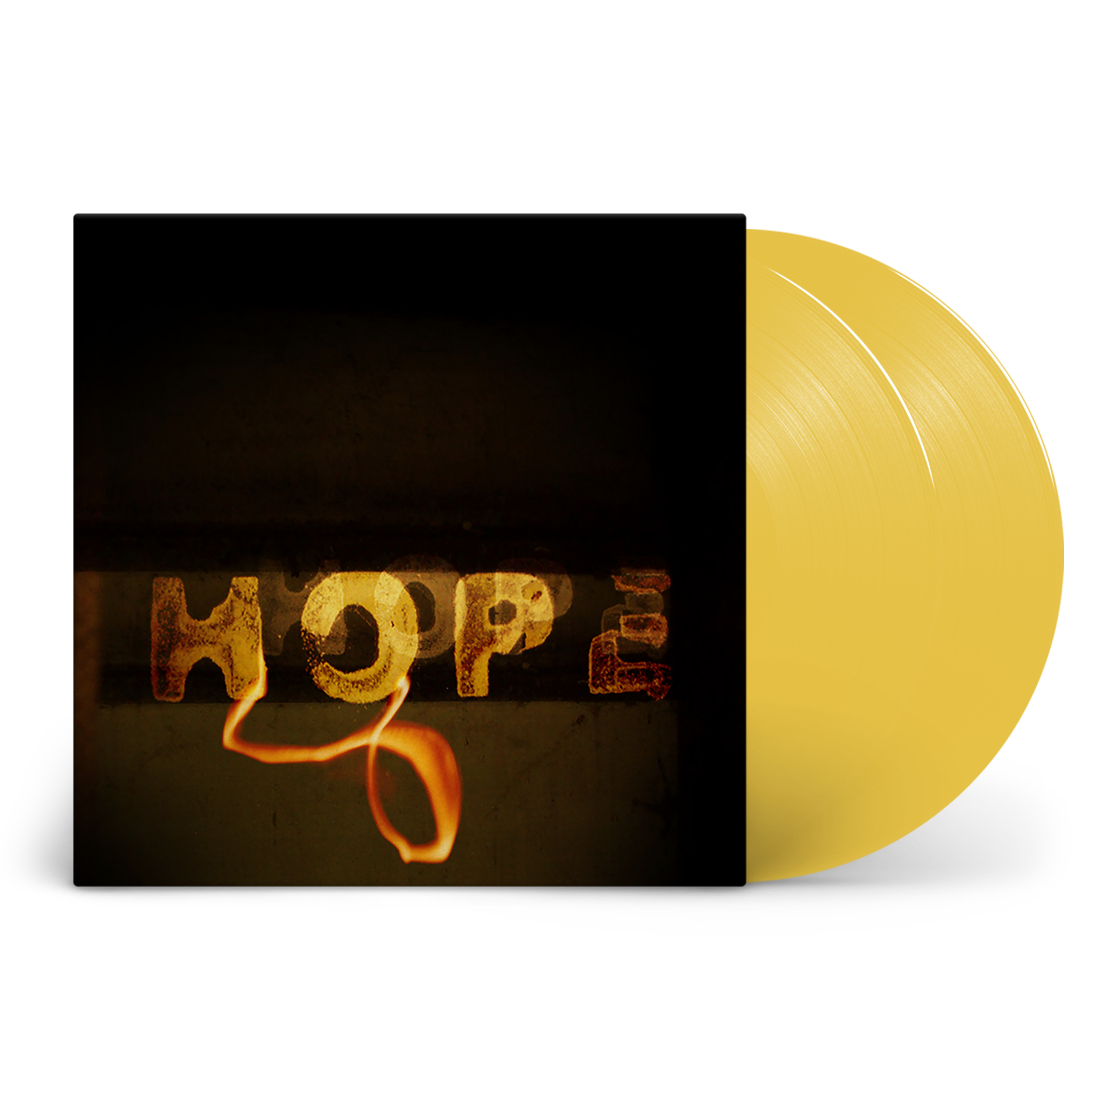 Various Artists - Hope (Warchild) (2LP Yellow Vinyl)